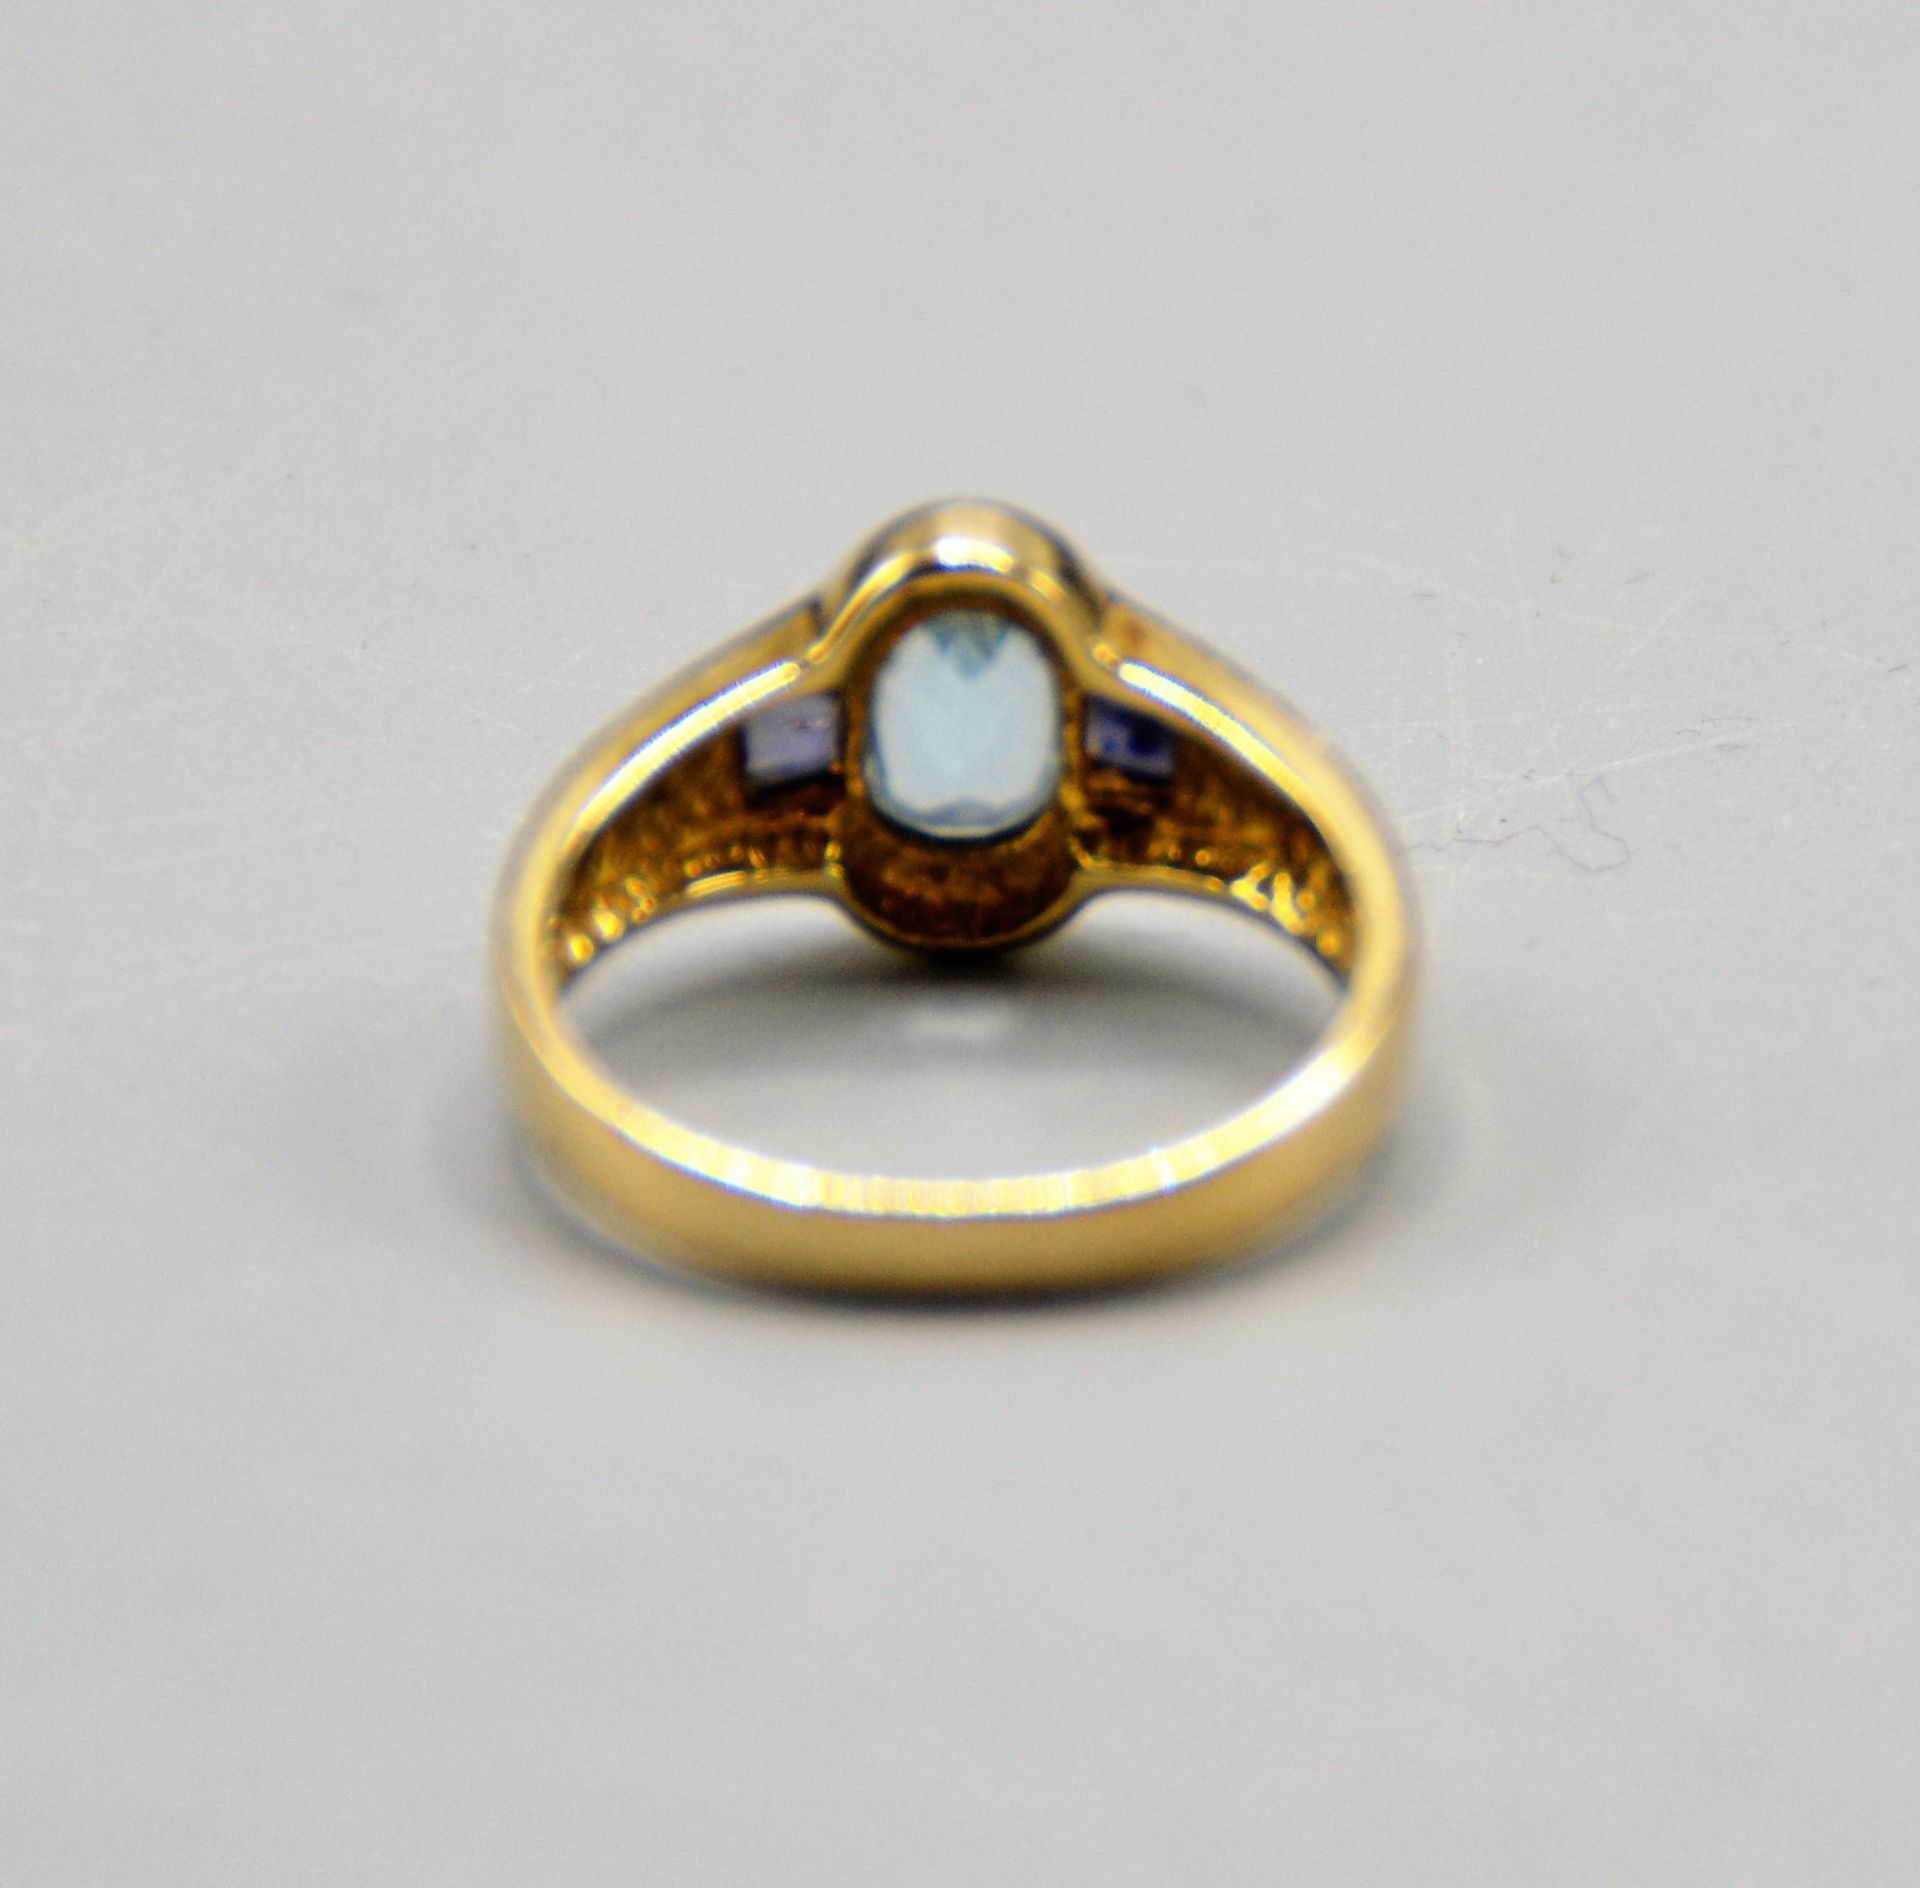 Blautopas Damenring 585 Gold mit 2 kleinen Amethysten, Topas oval facettiert ca. 7 x 5 mm, Ring Ø 1 - Image 3 of 3